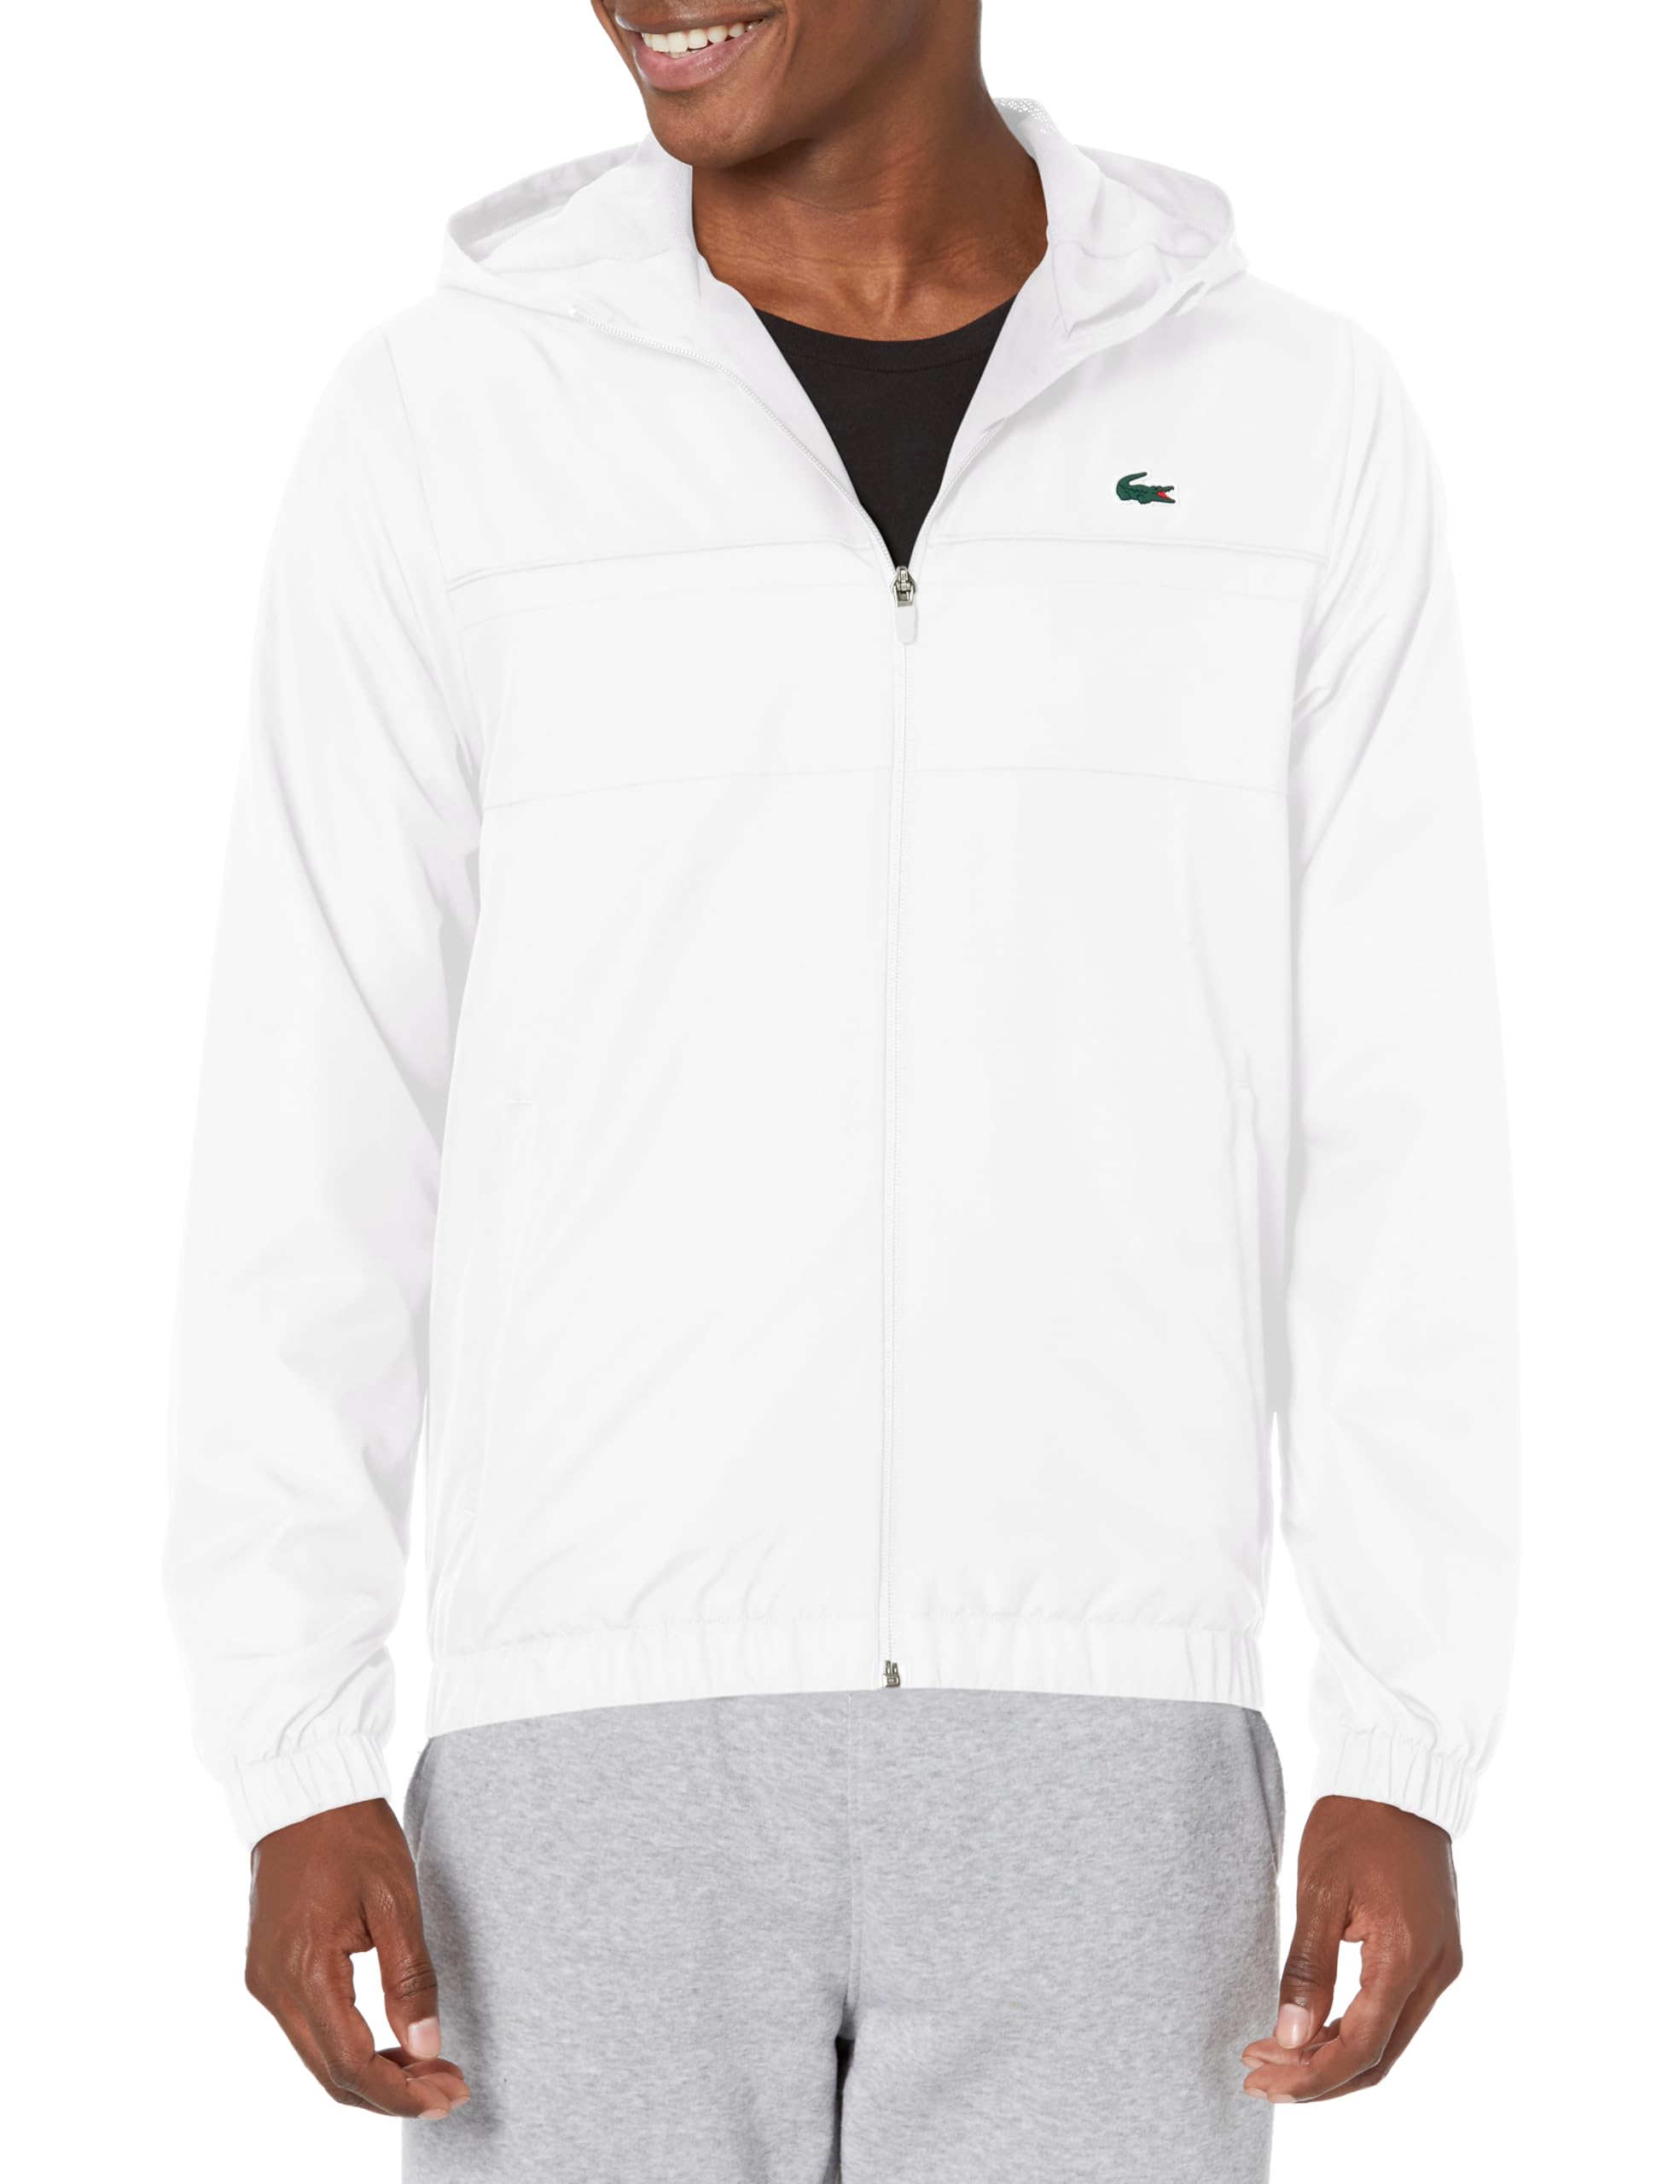 Lacoste Mens Standard Full Zip Tennis Jacket with Hood BlancBlanc-Blanc